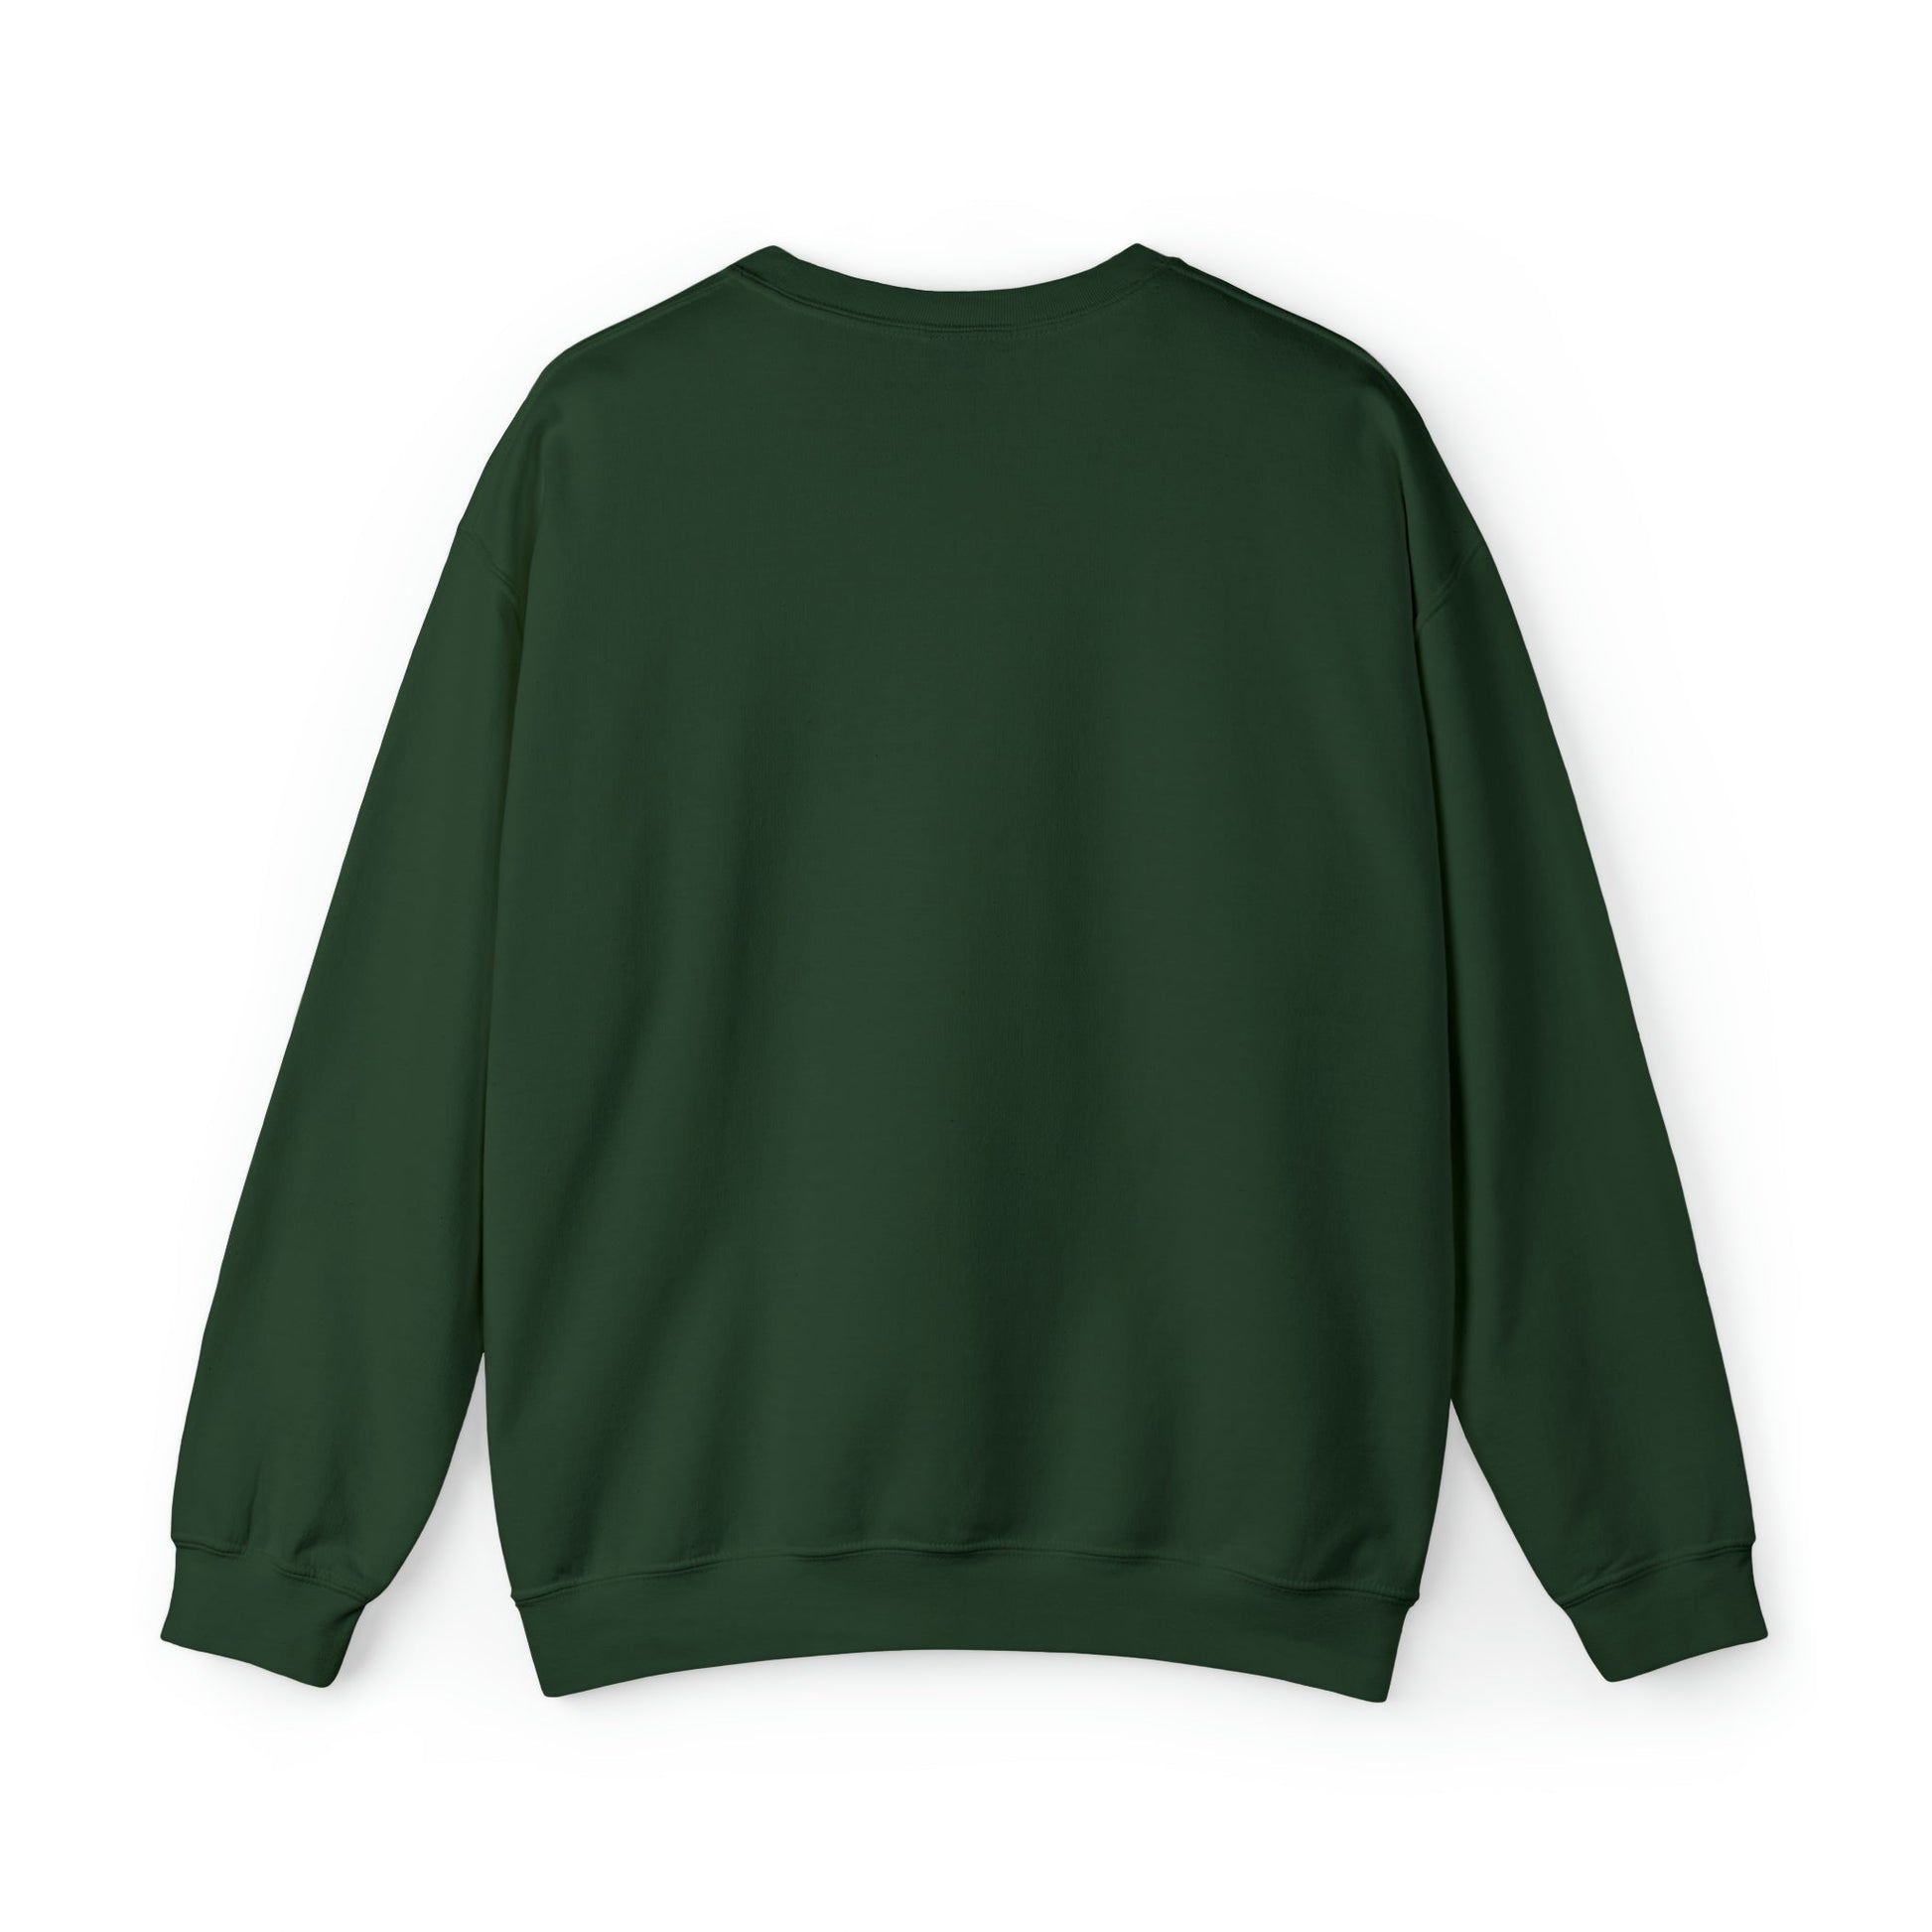 F💎ck Yes You Glorious B💎tch Unisex Heavy Blend™ Crewneck Sweatshirt